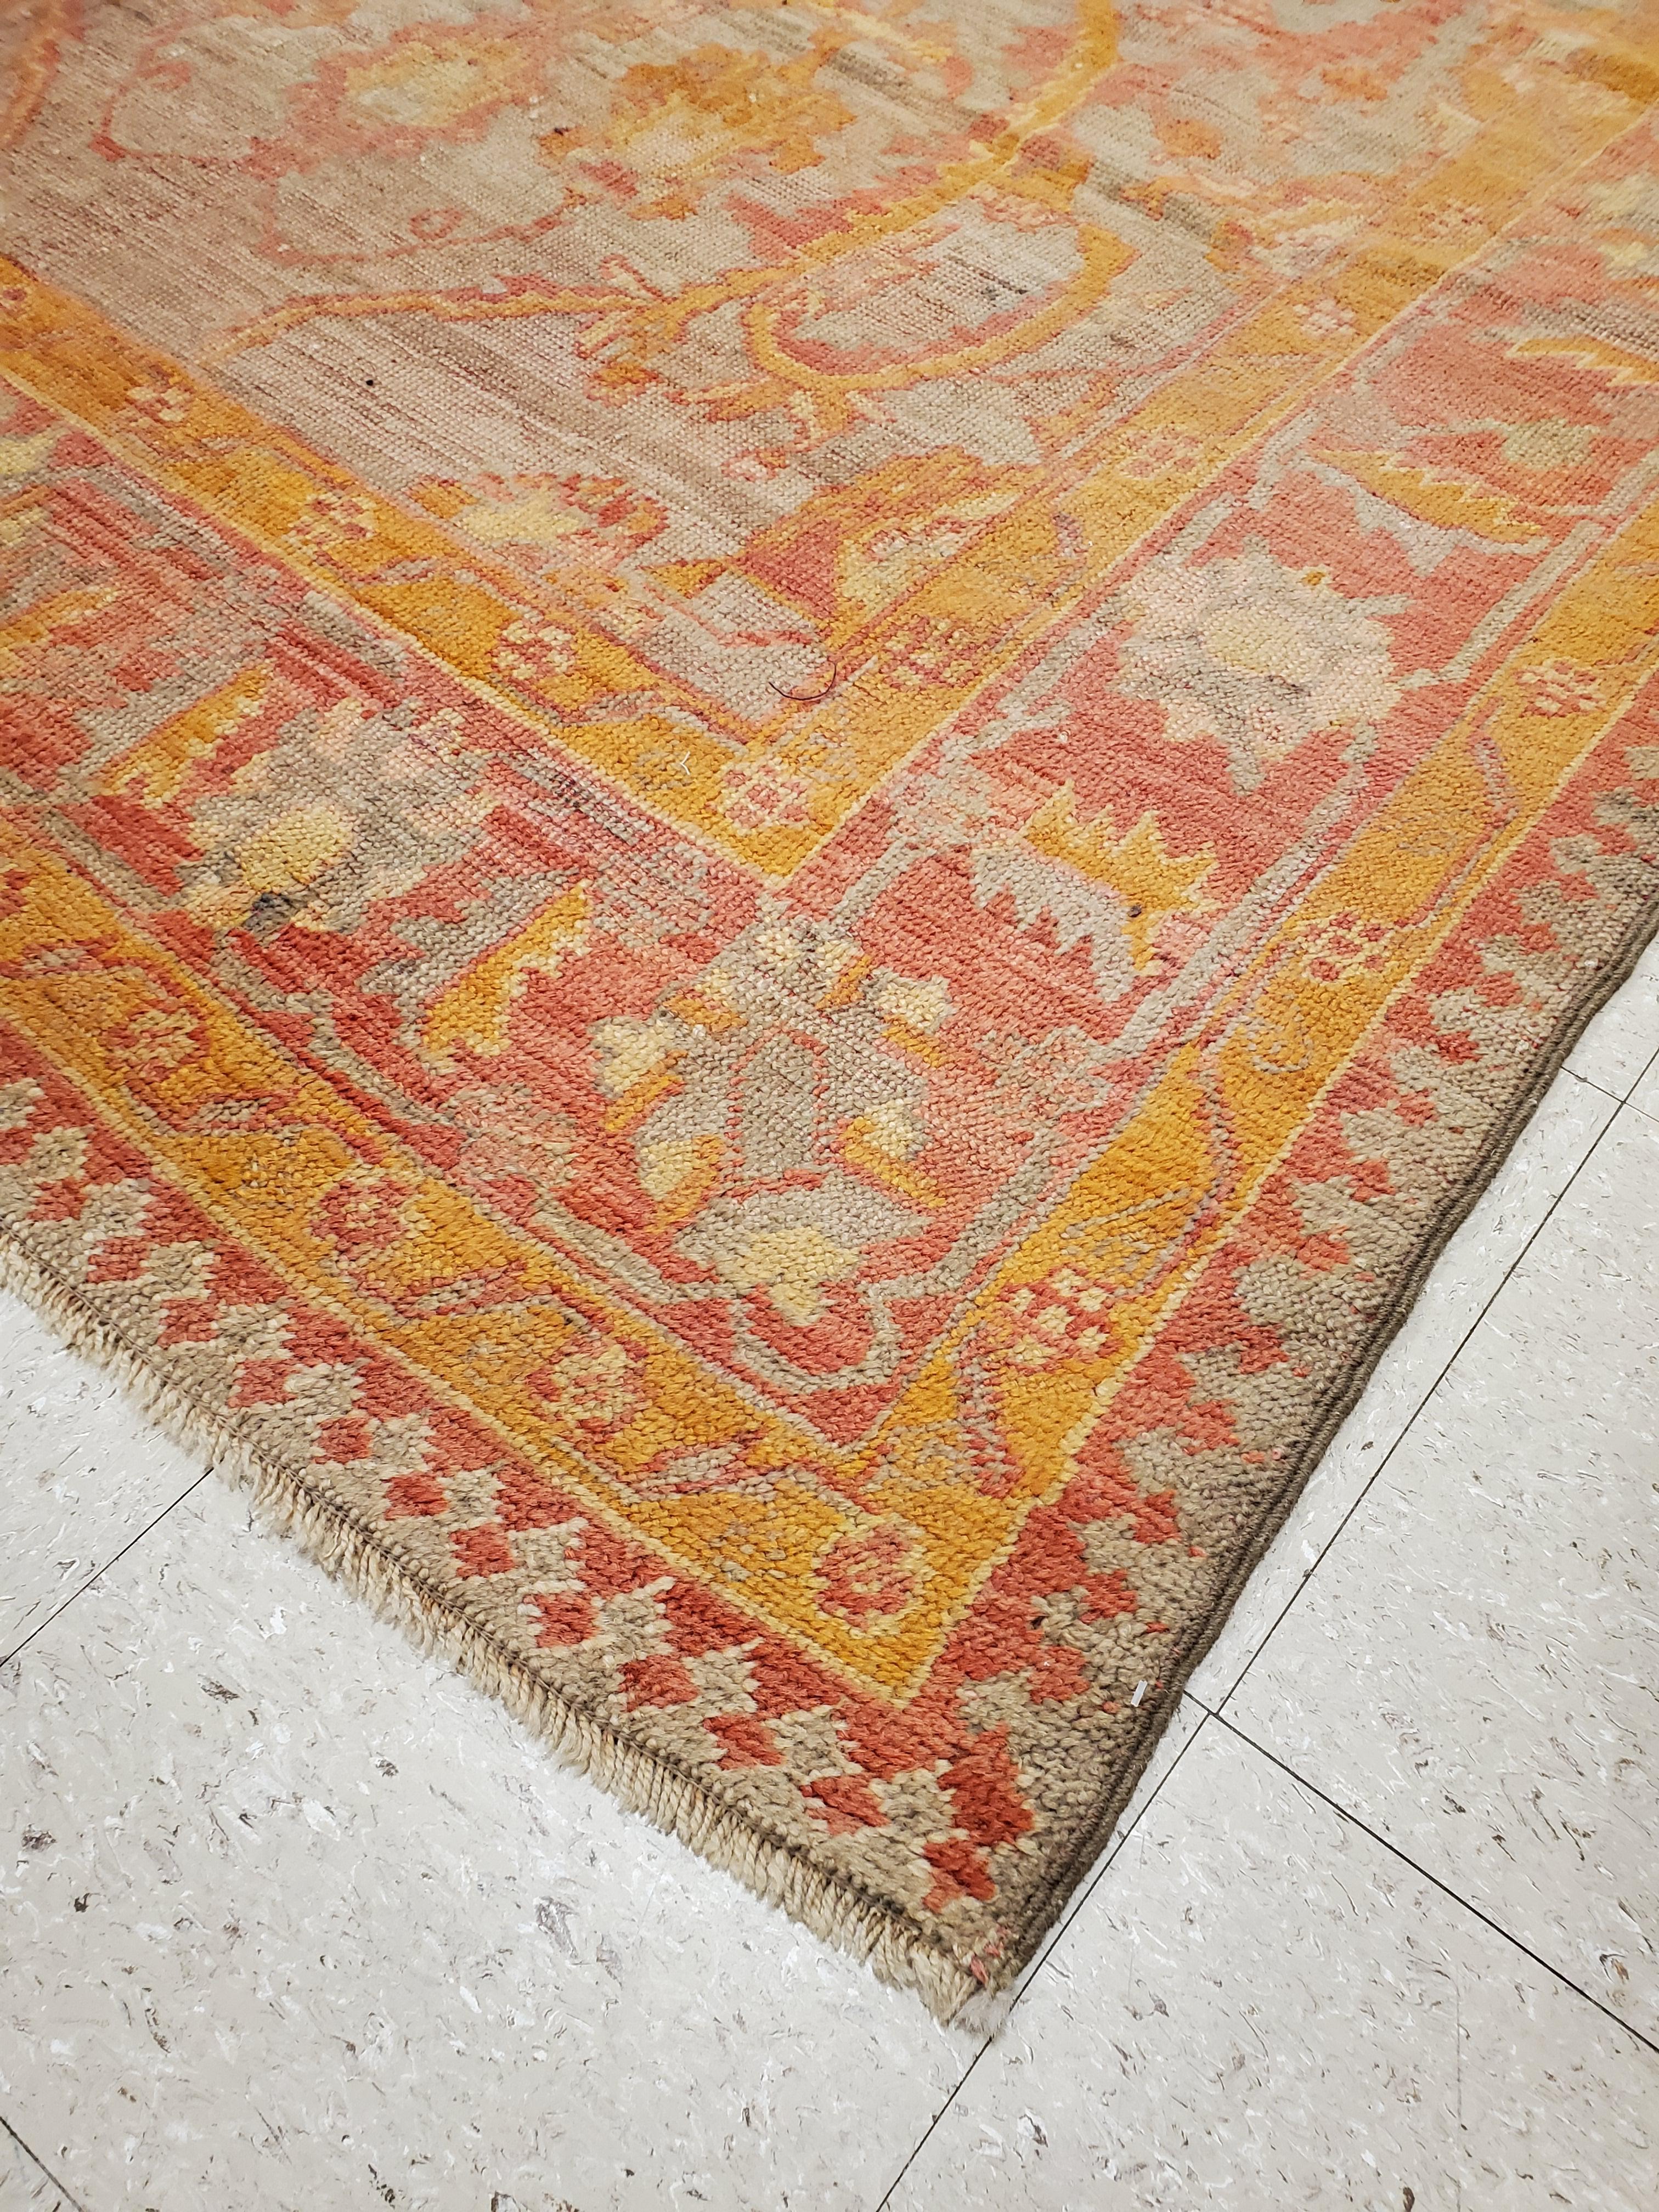 Antique Oushak Carpet, Handmade Turkish Oriental Rug, Saffron, Coral, Light Blue For Sale 6